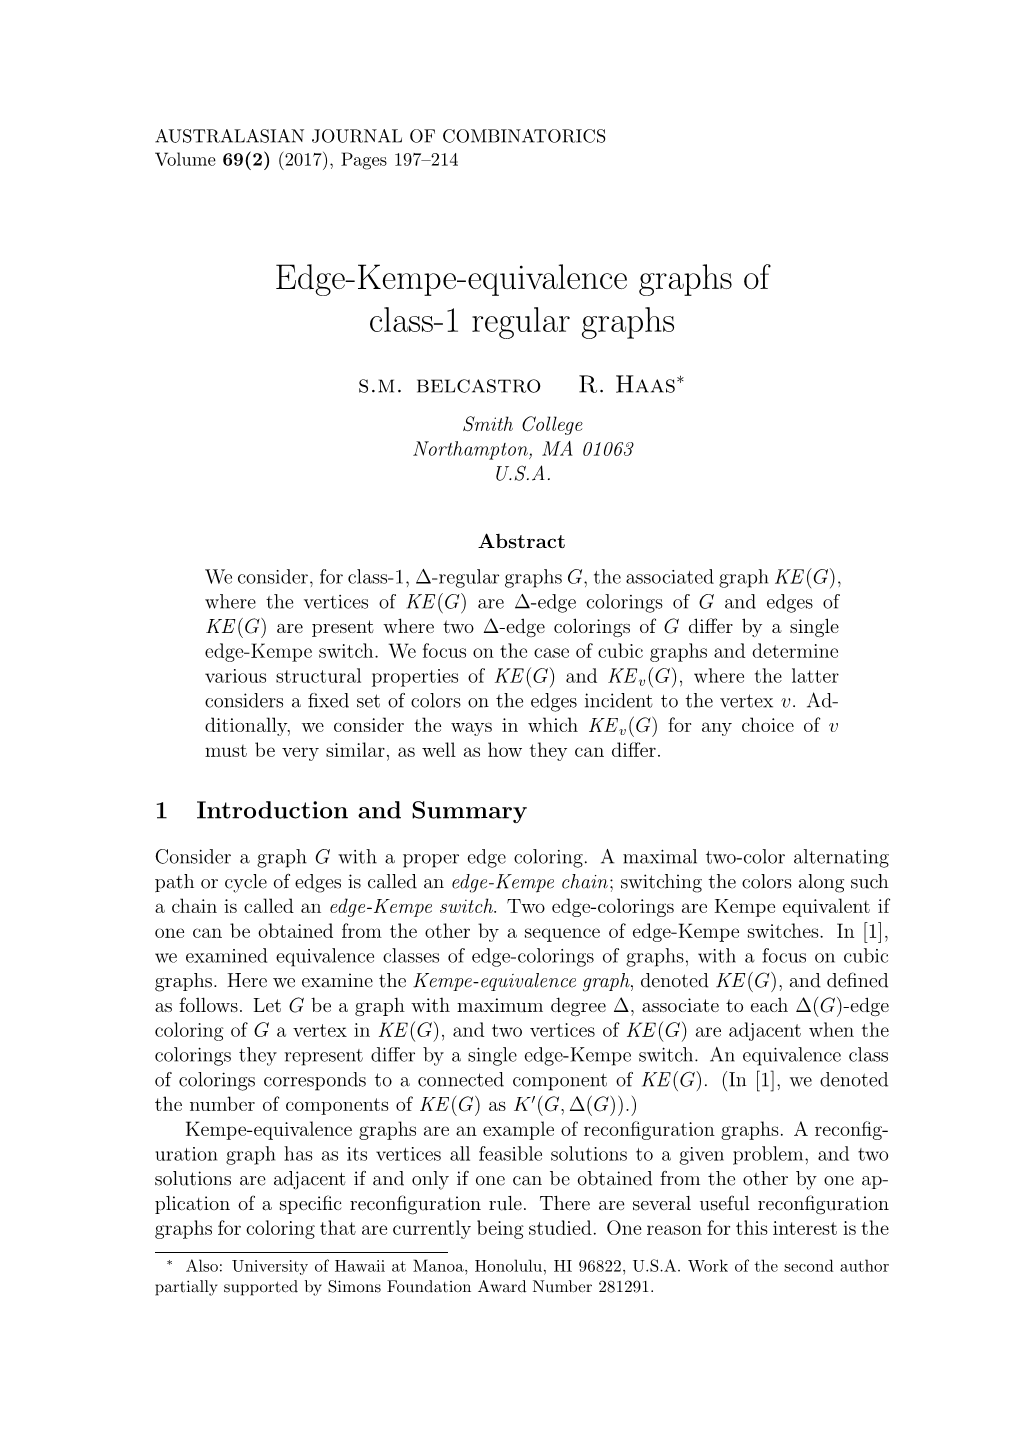 Edge-Kempe-Equivalence Graphs of Class-1 Regular Graphs